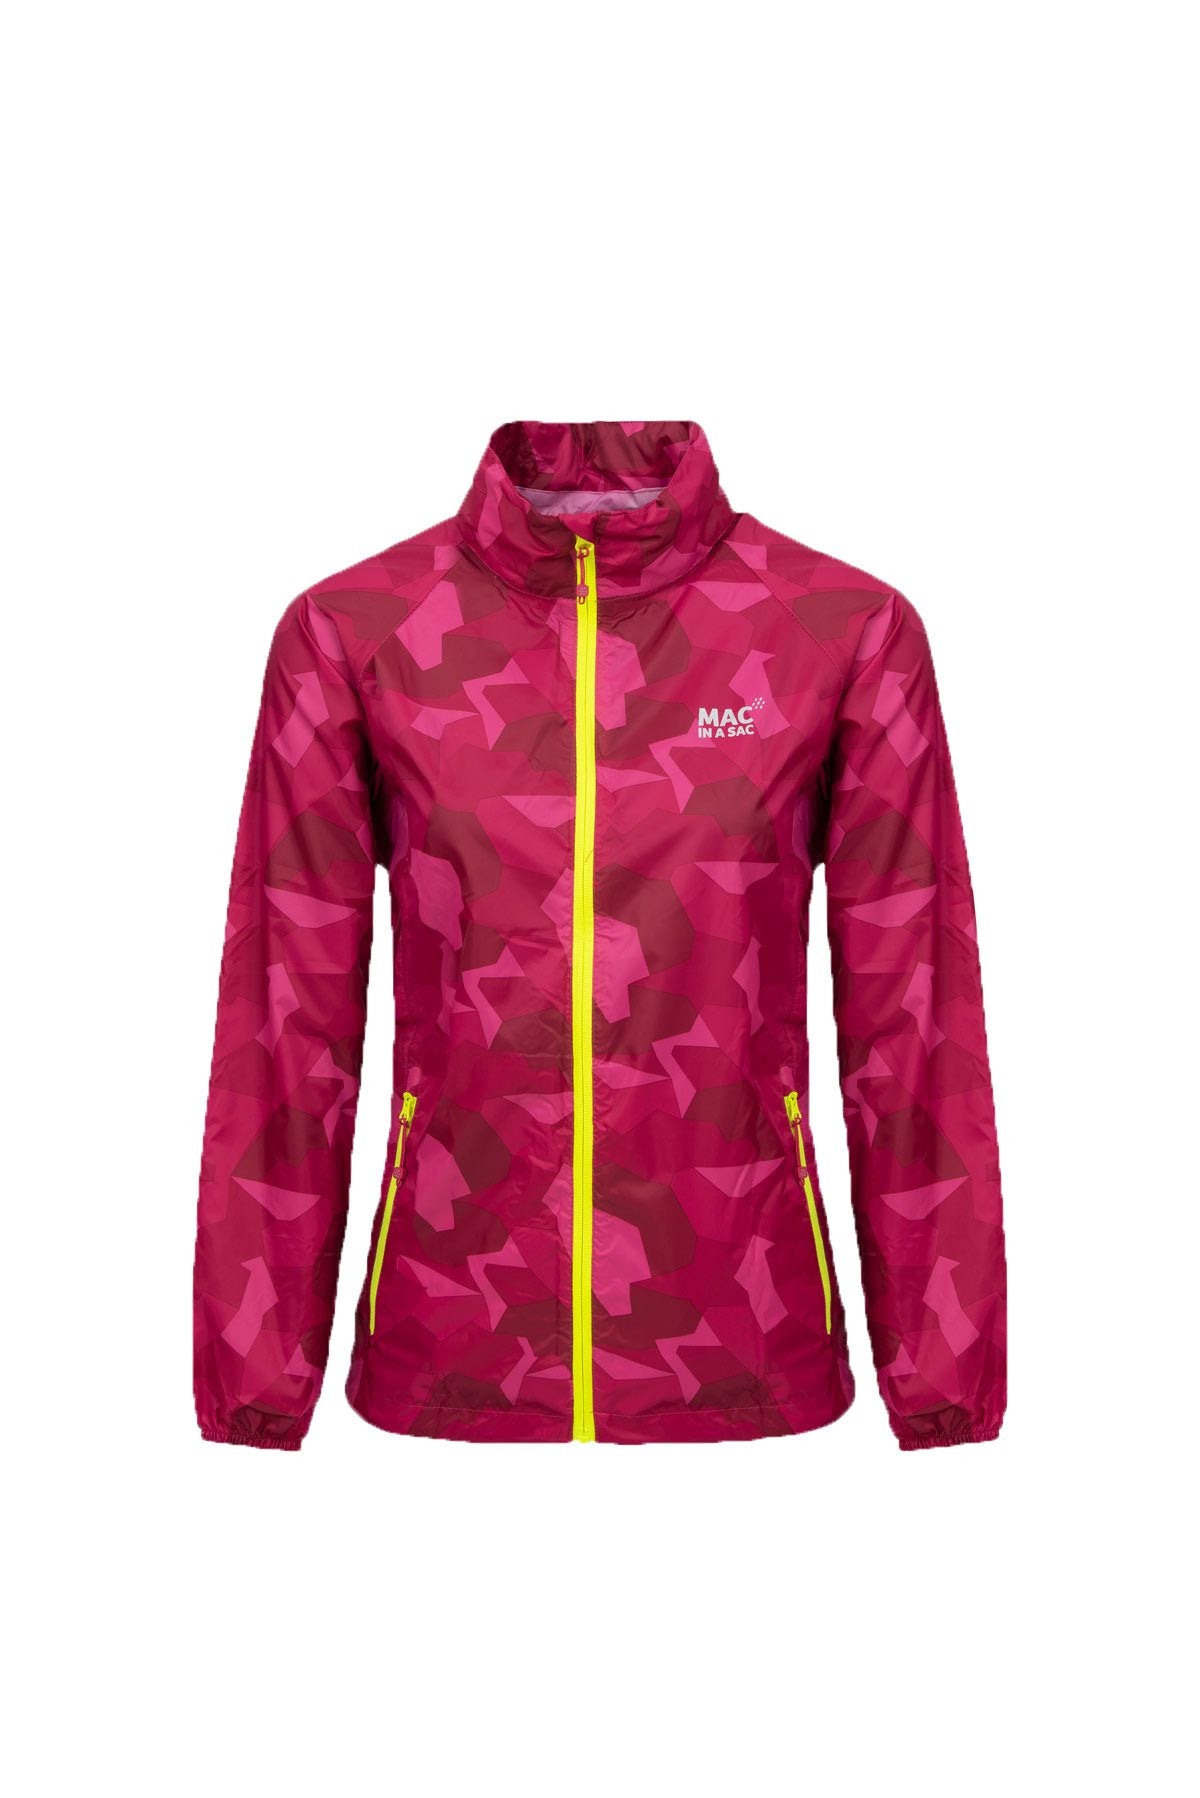 Mac In A Sac Edition Waterproof Jacket In Pink Camo @ www.millscountrystore.com